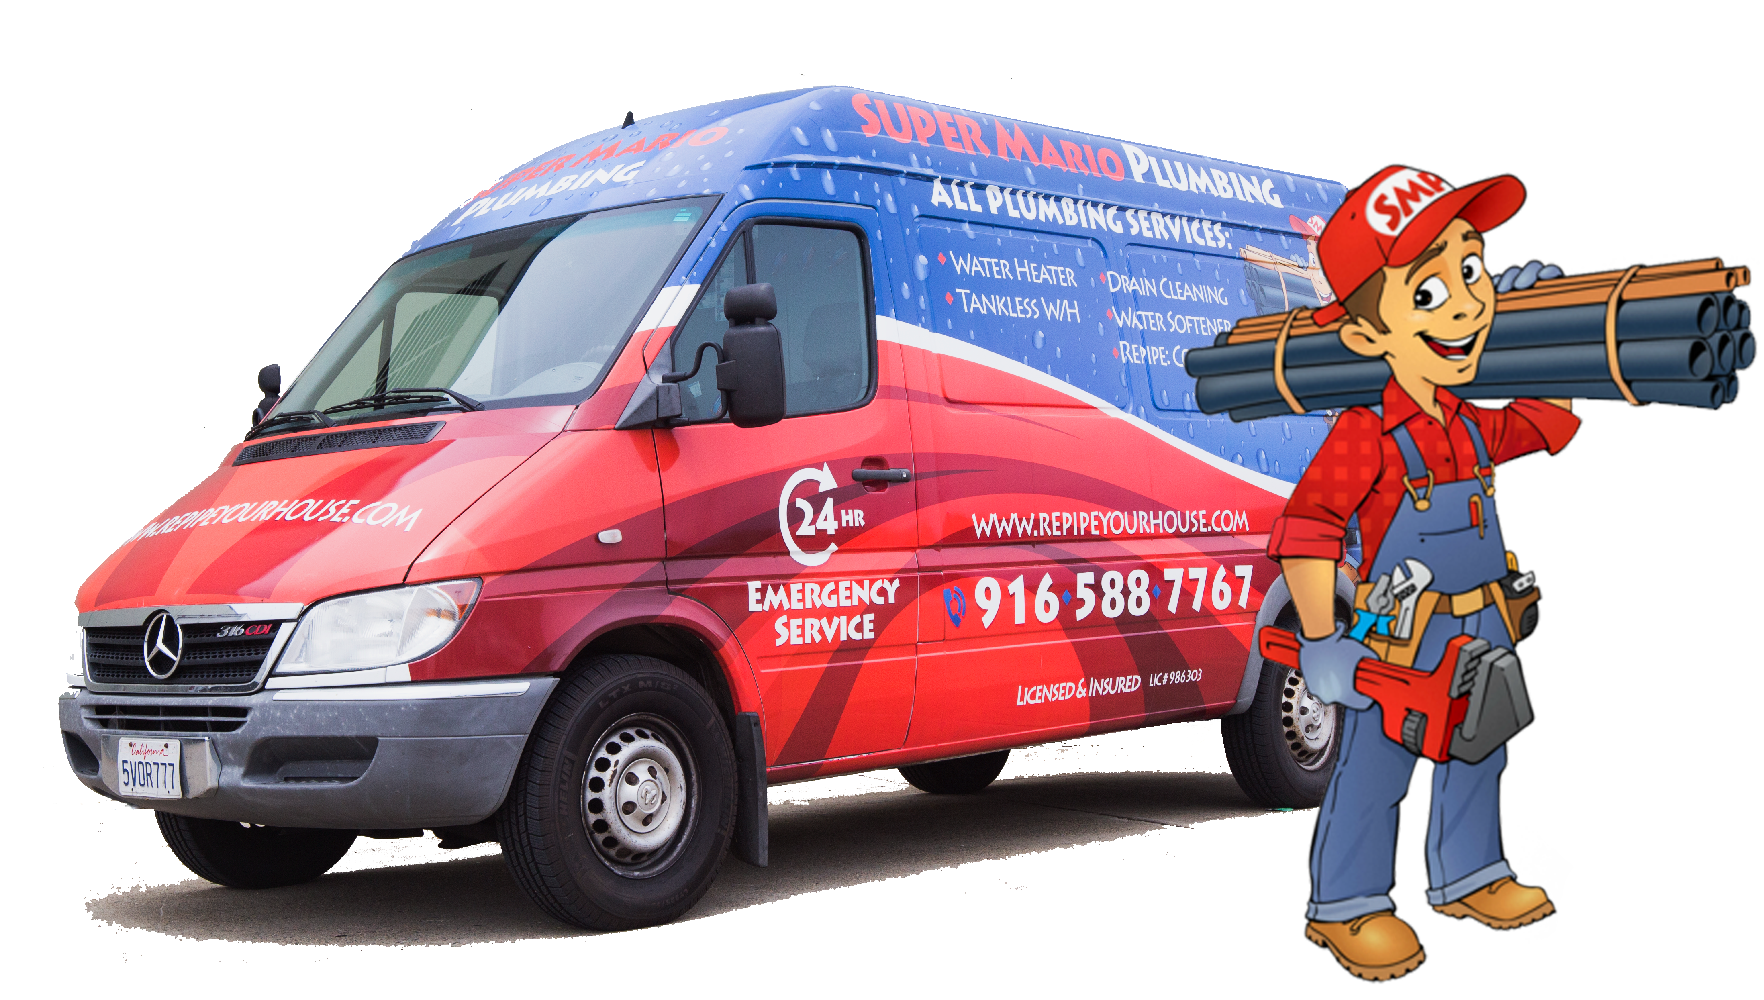 Professional Plumbing Services: Super Mario Plumbing.